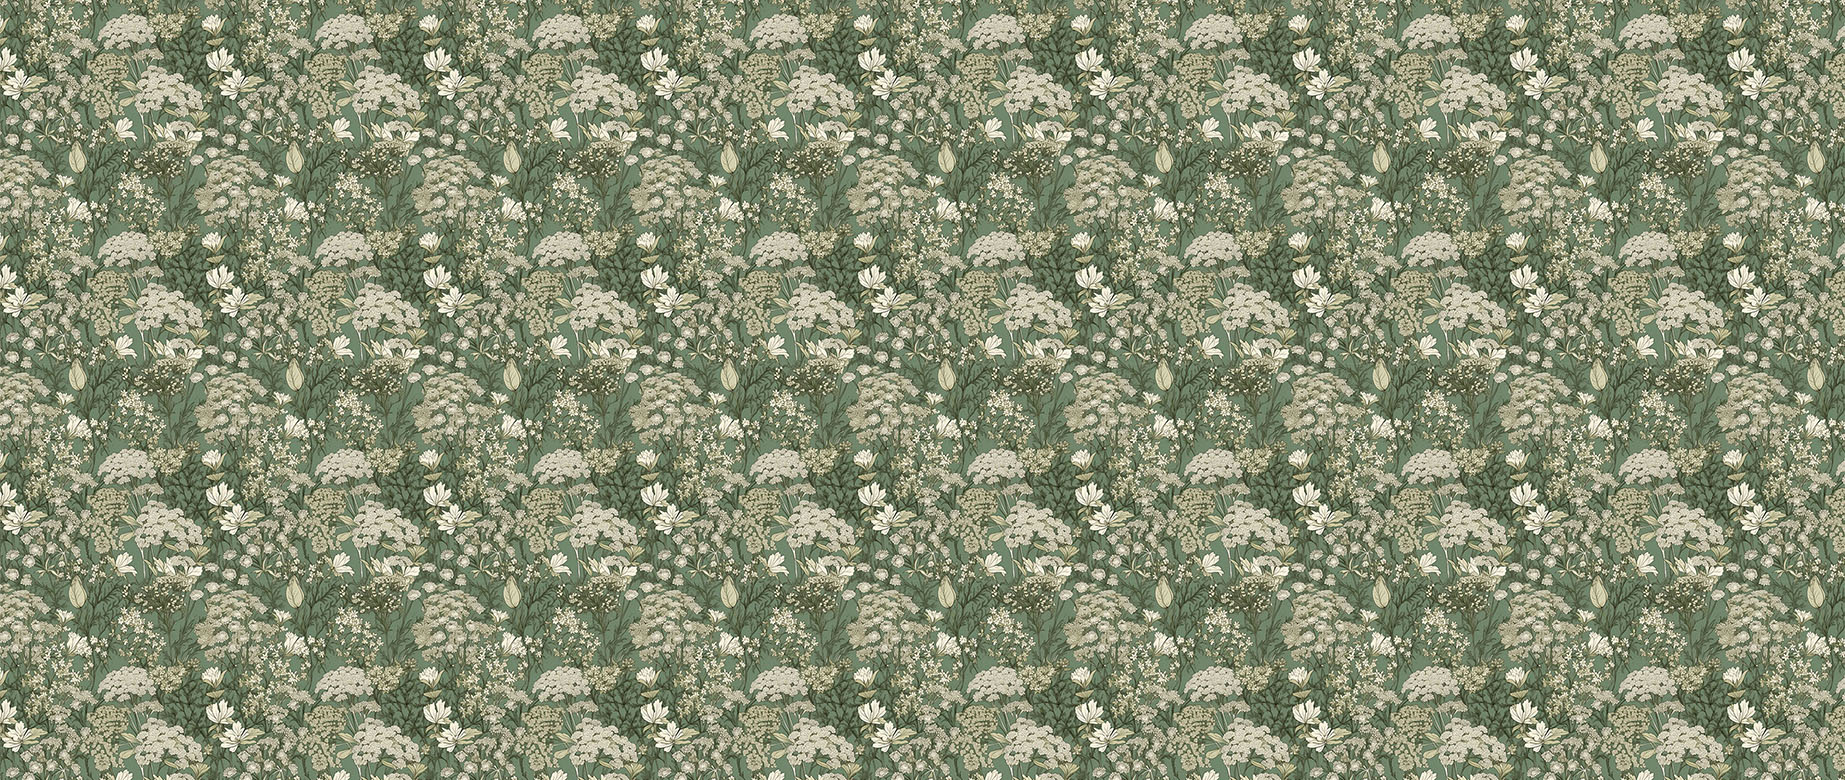 green-background-beige-flower-buds-wallpaper-wide-view